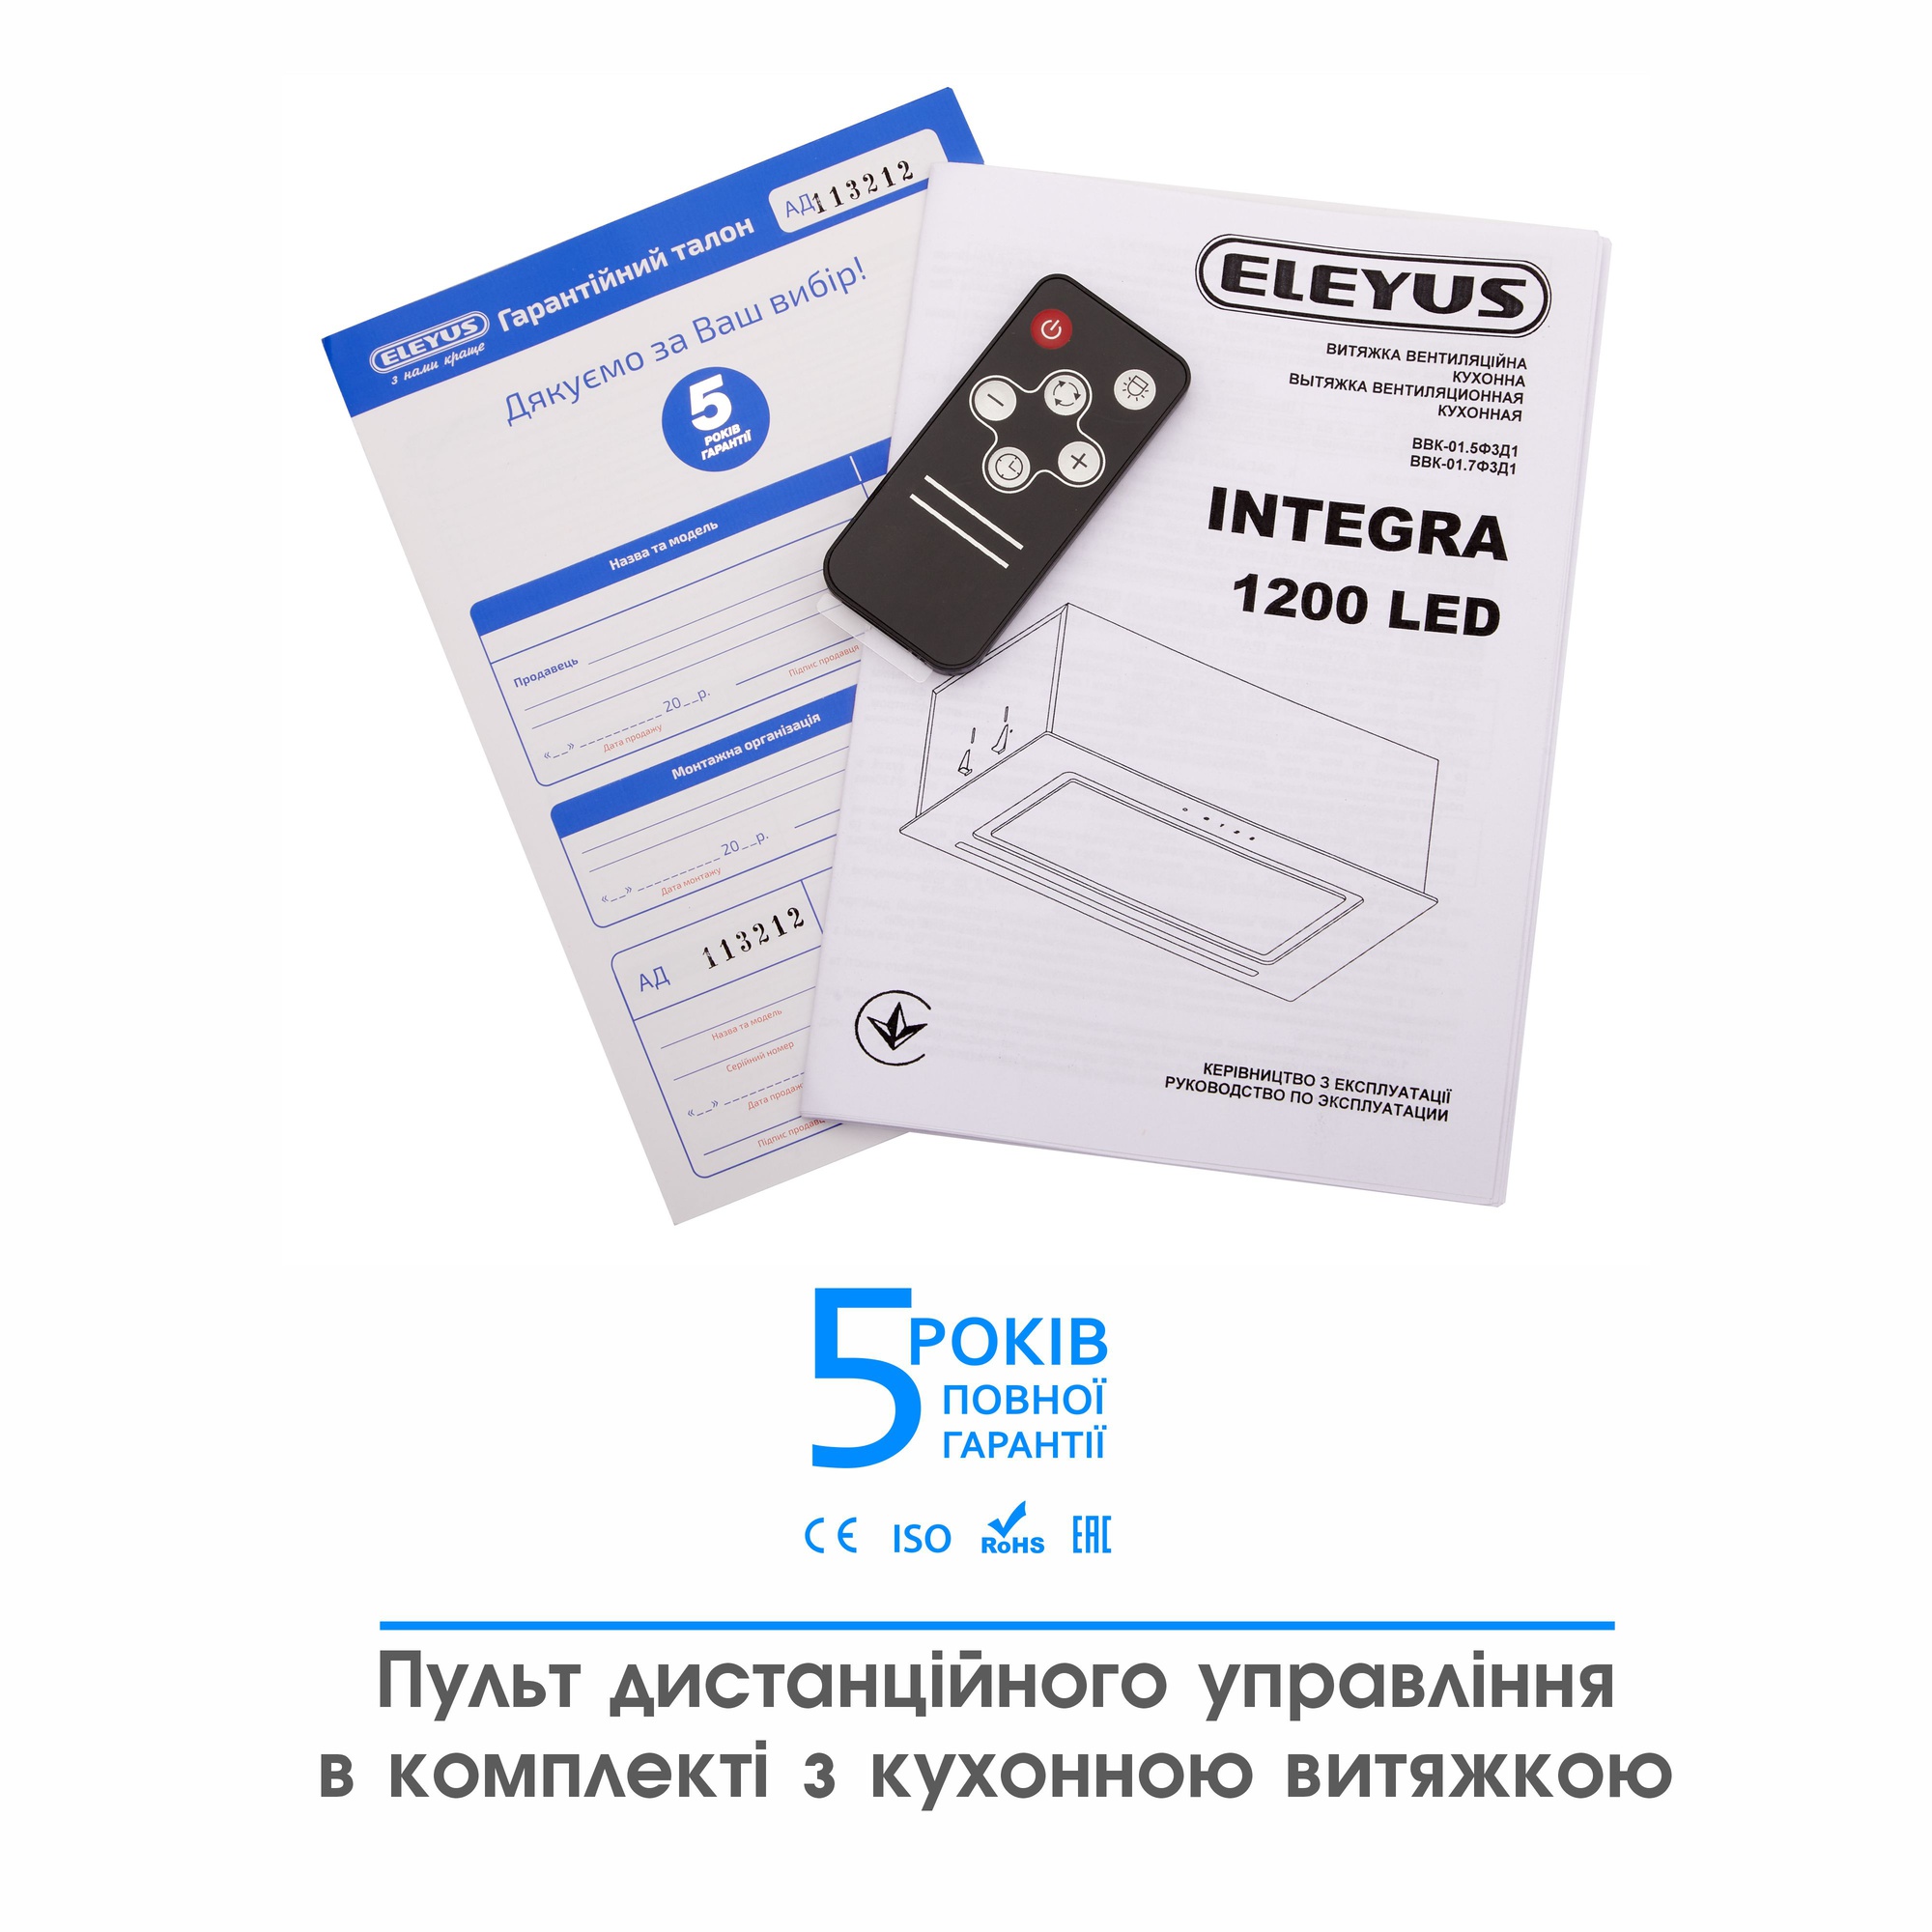 картка товару Eleyus Integra 1200 LED 52 WH - фото 16